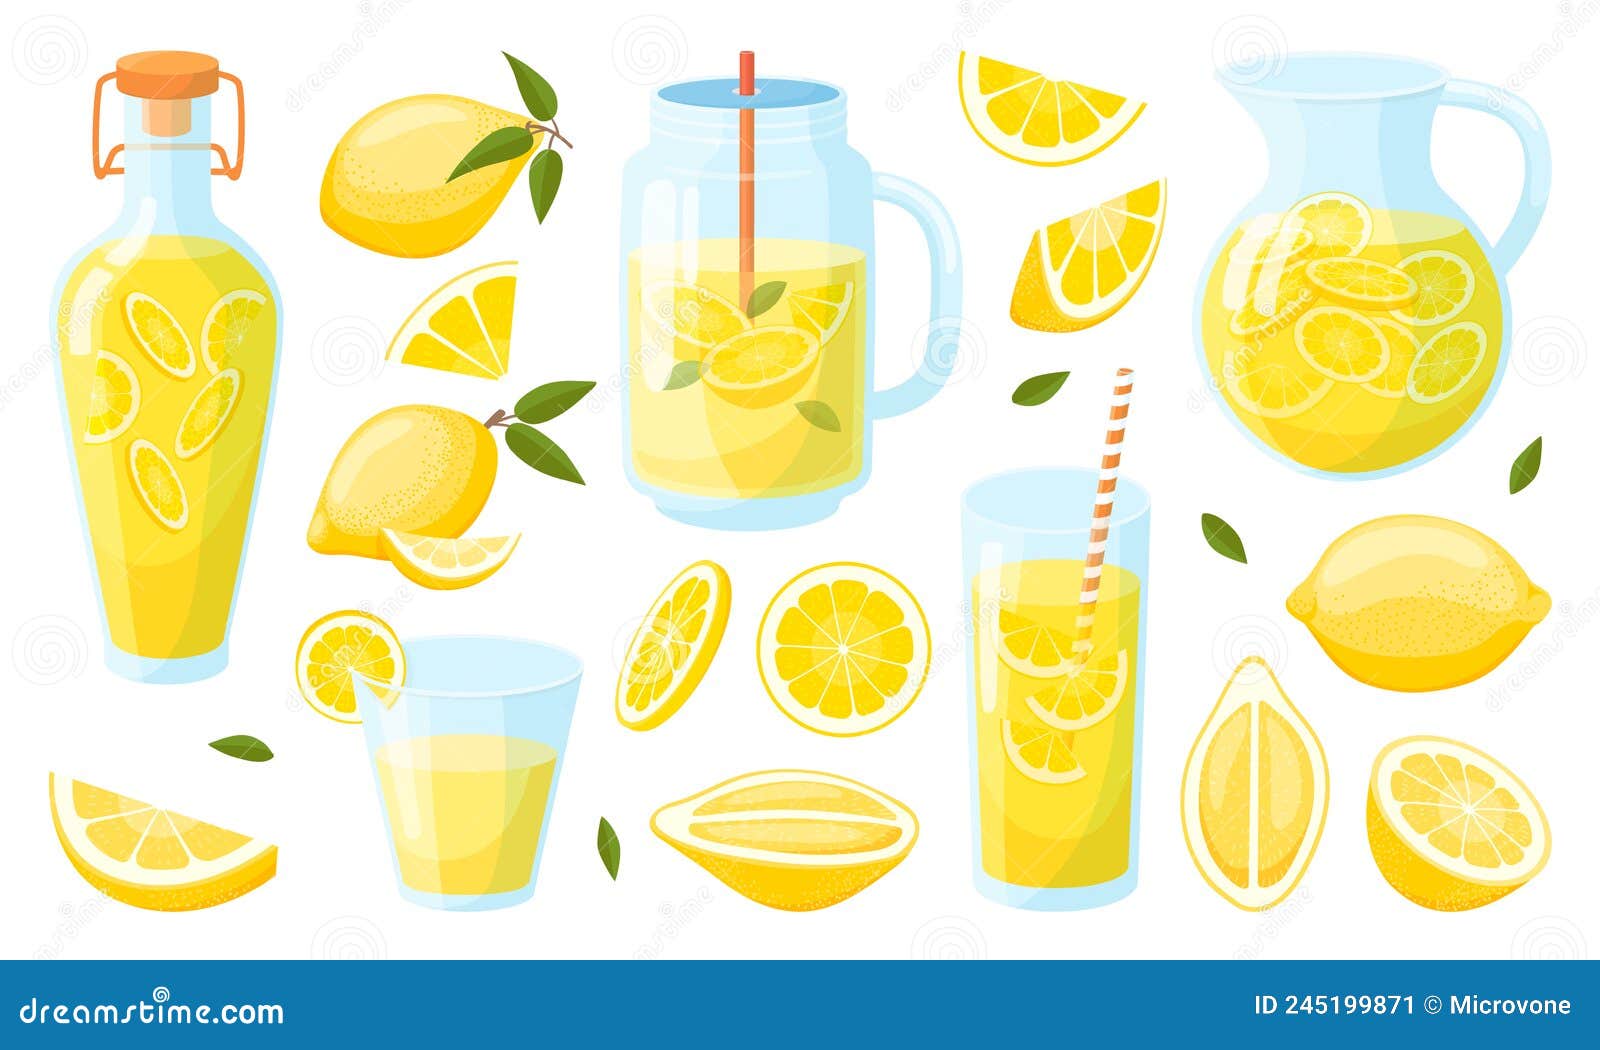 https://thumbs.dreamstime.com/z/cartoon-lemonade-lemon-refreshing-juice-glasses-jars-refresh-summer-drinks-citrus-pieces-mint-bottle-glass-pitcher-245199871.jpg